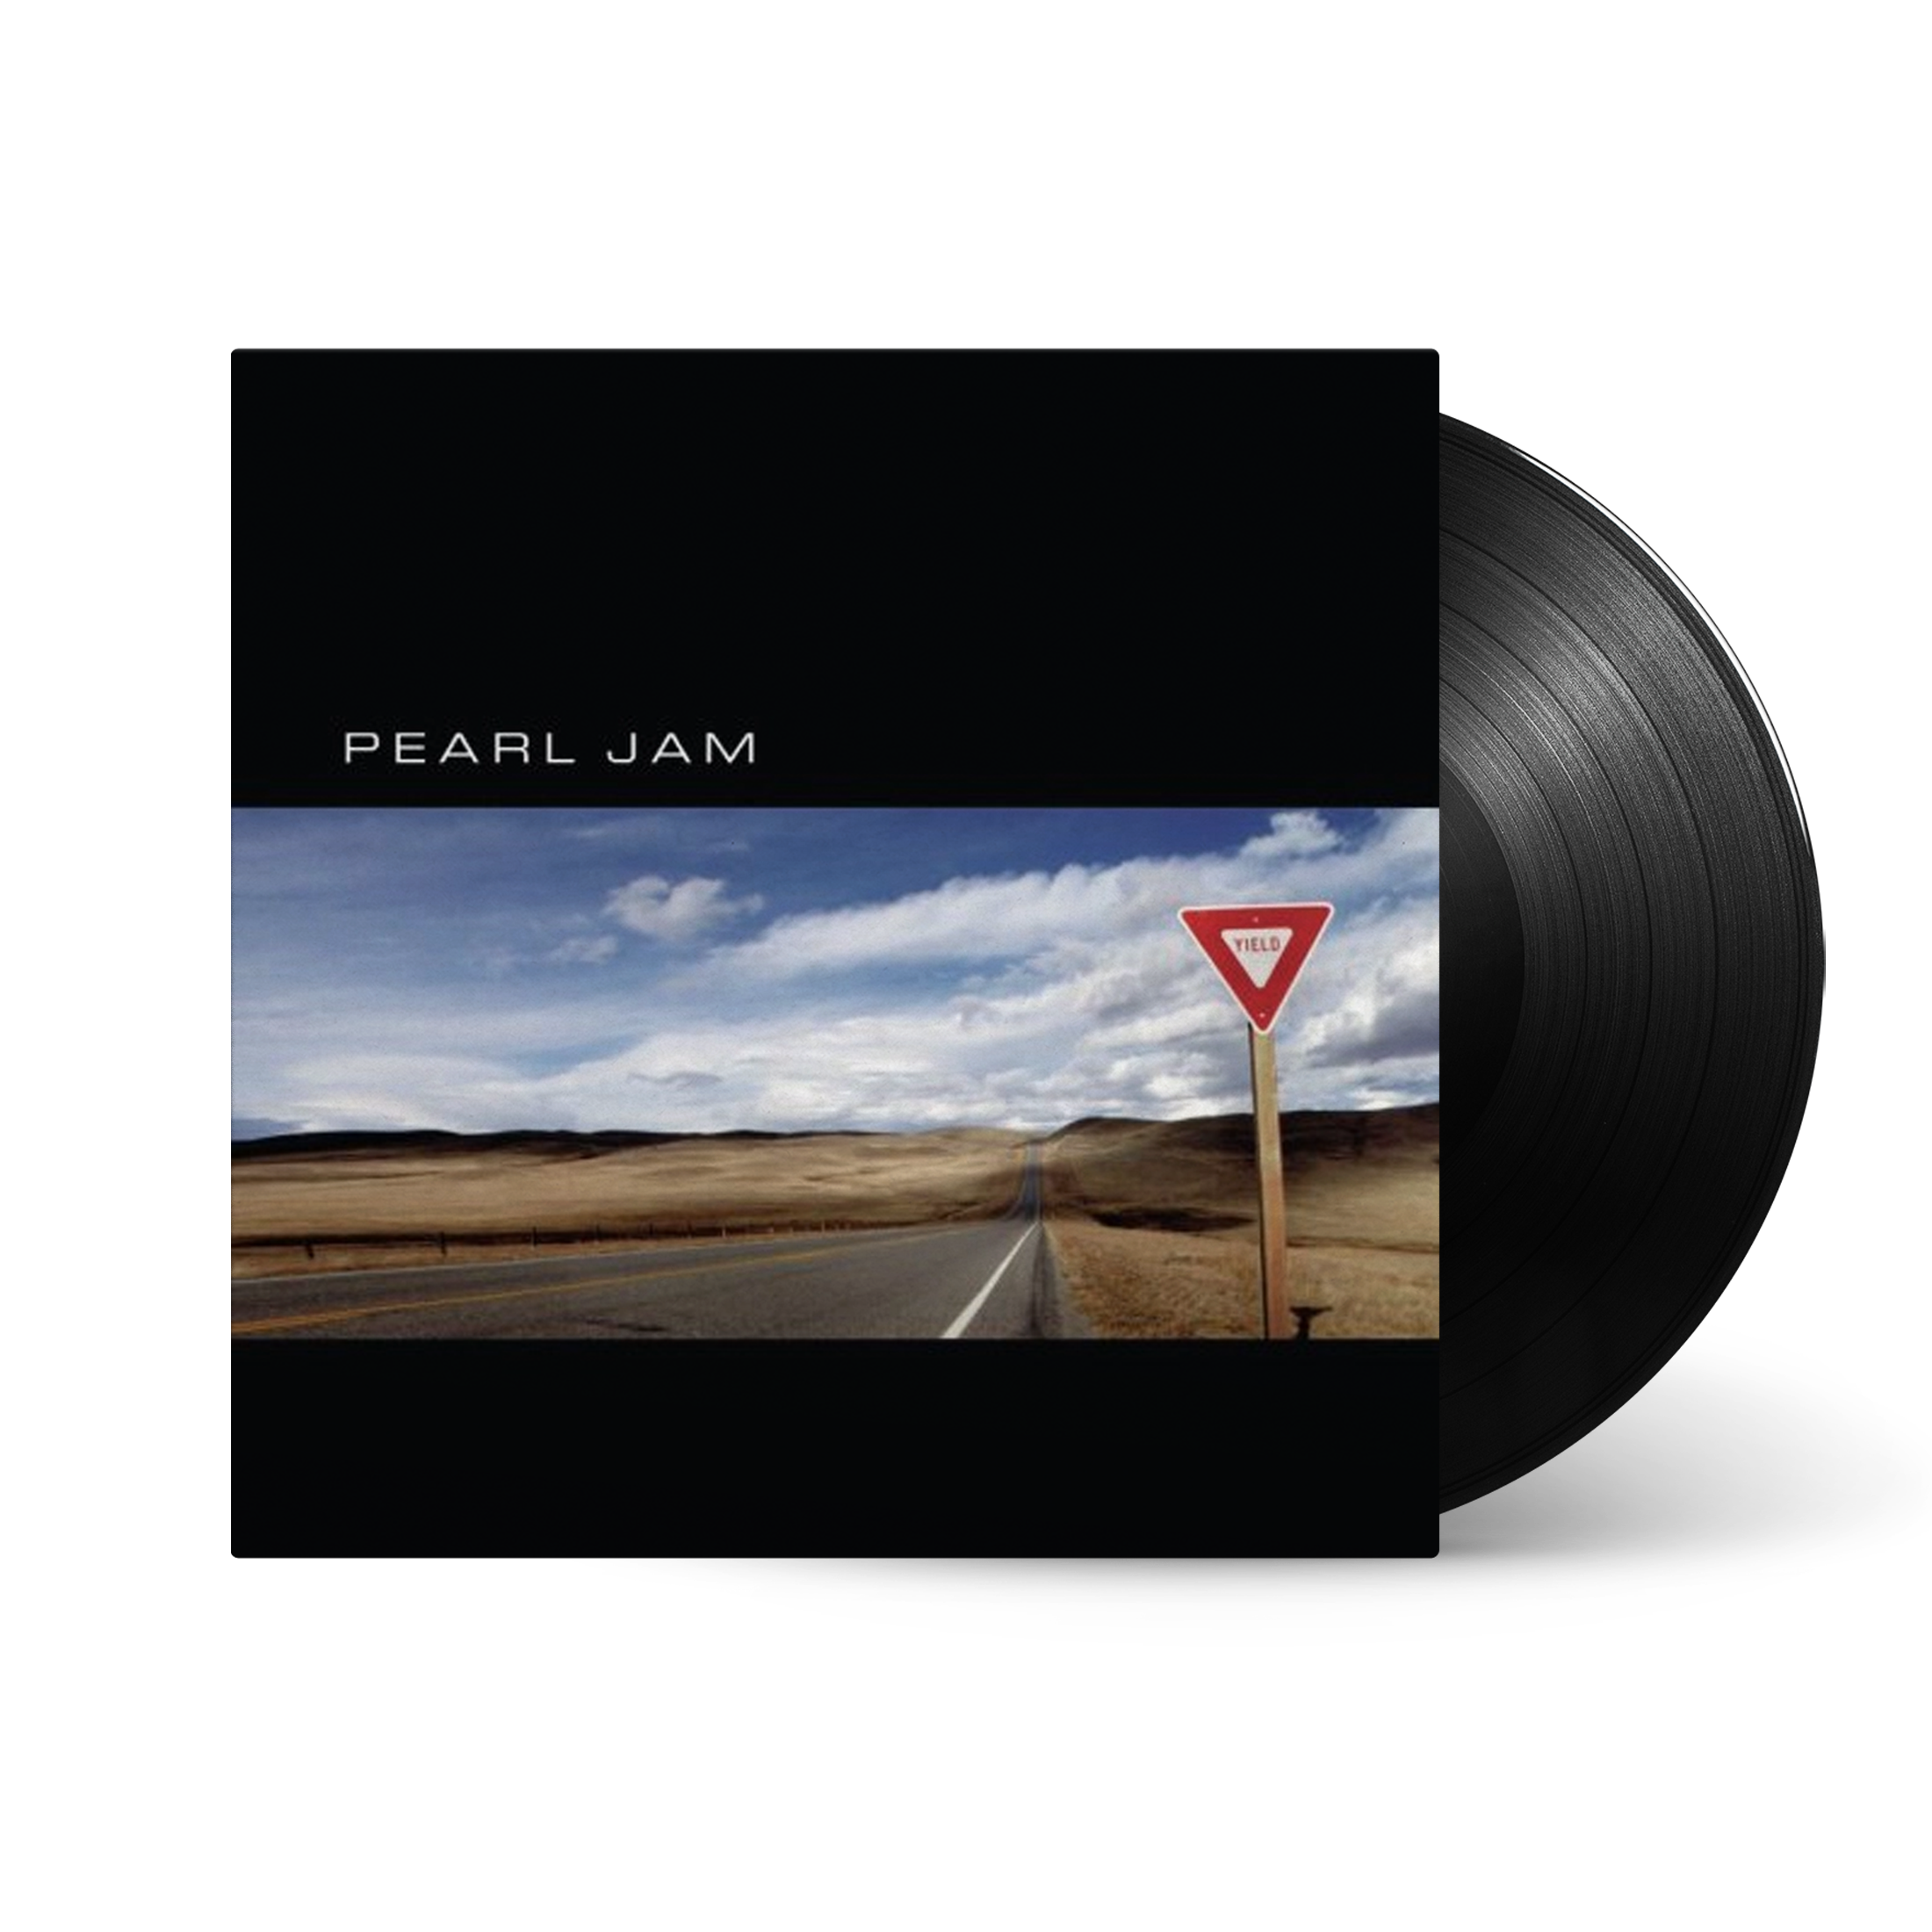 Pearl Jam - Yield: Remastered Vinyl LP - Sound of Vinyl